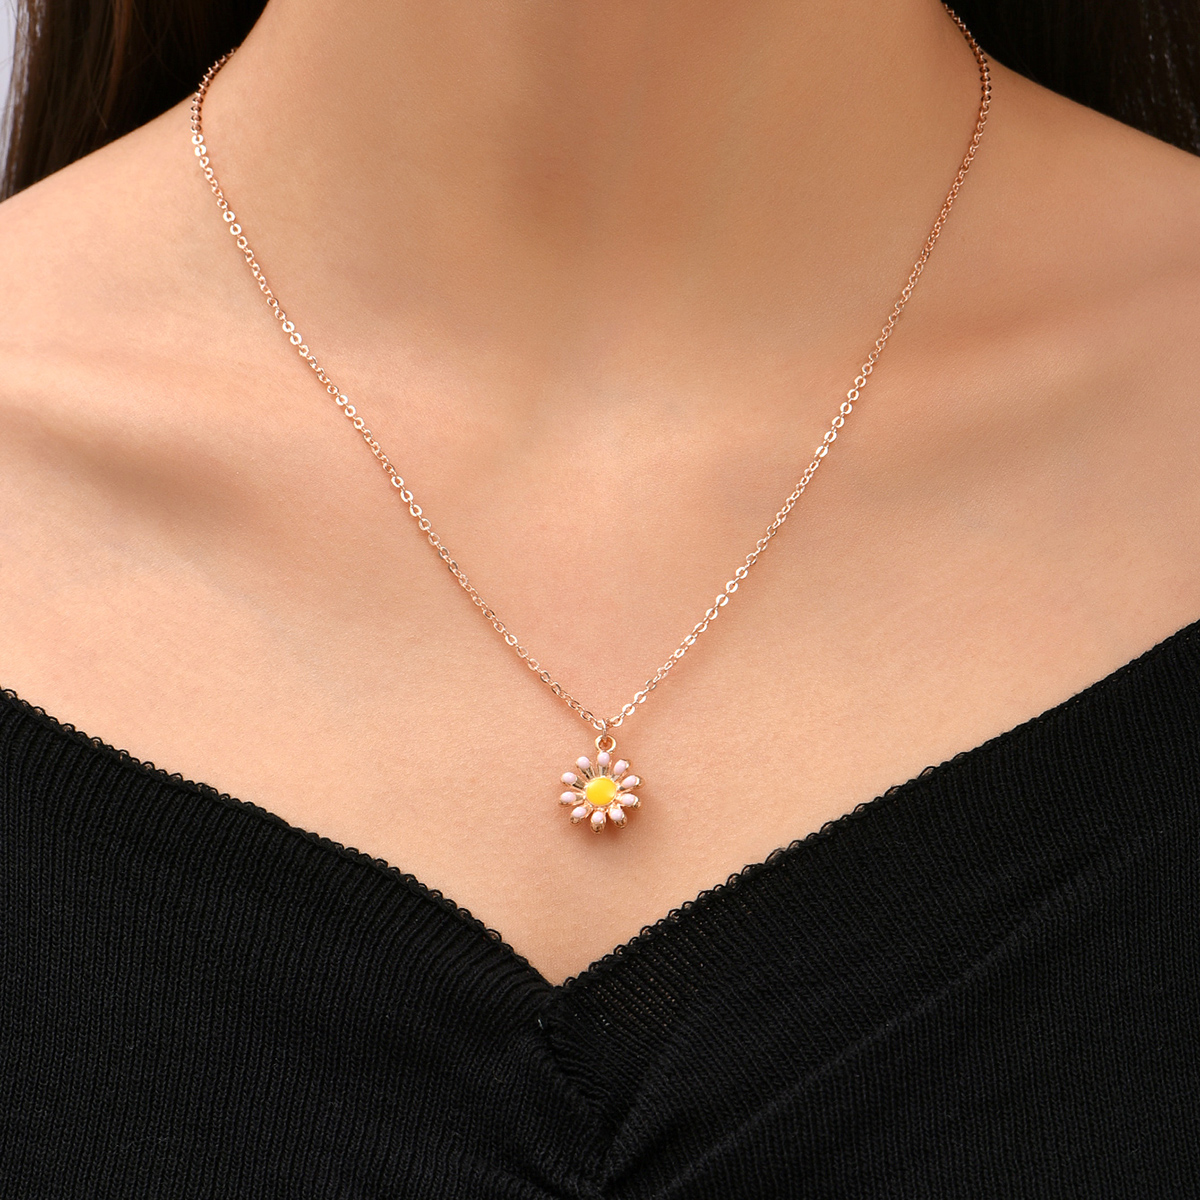 10pcs Rose Gold Tone Pink Daisy Flower Pendant Necklace|GCJ296|UK SELLER